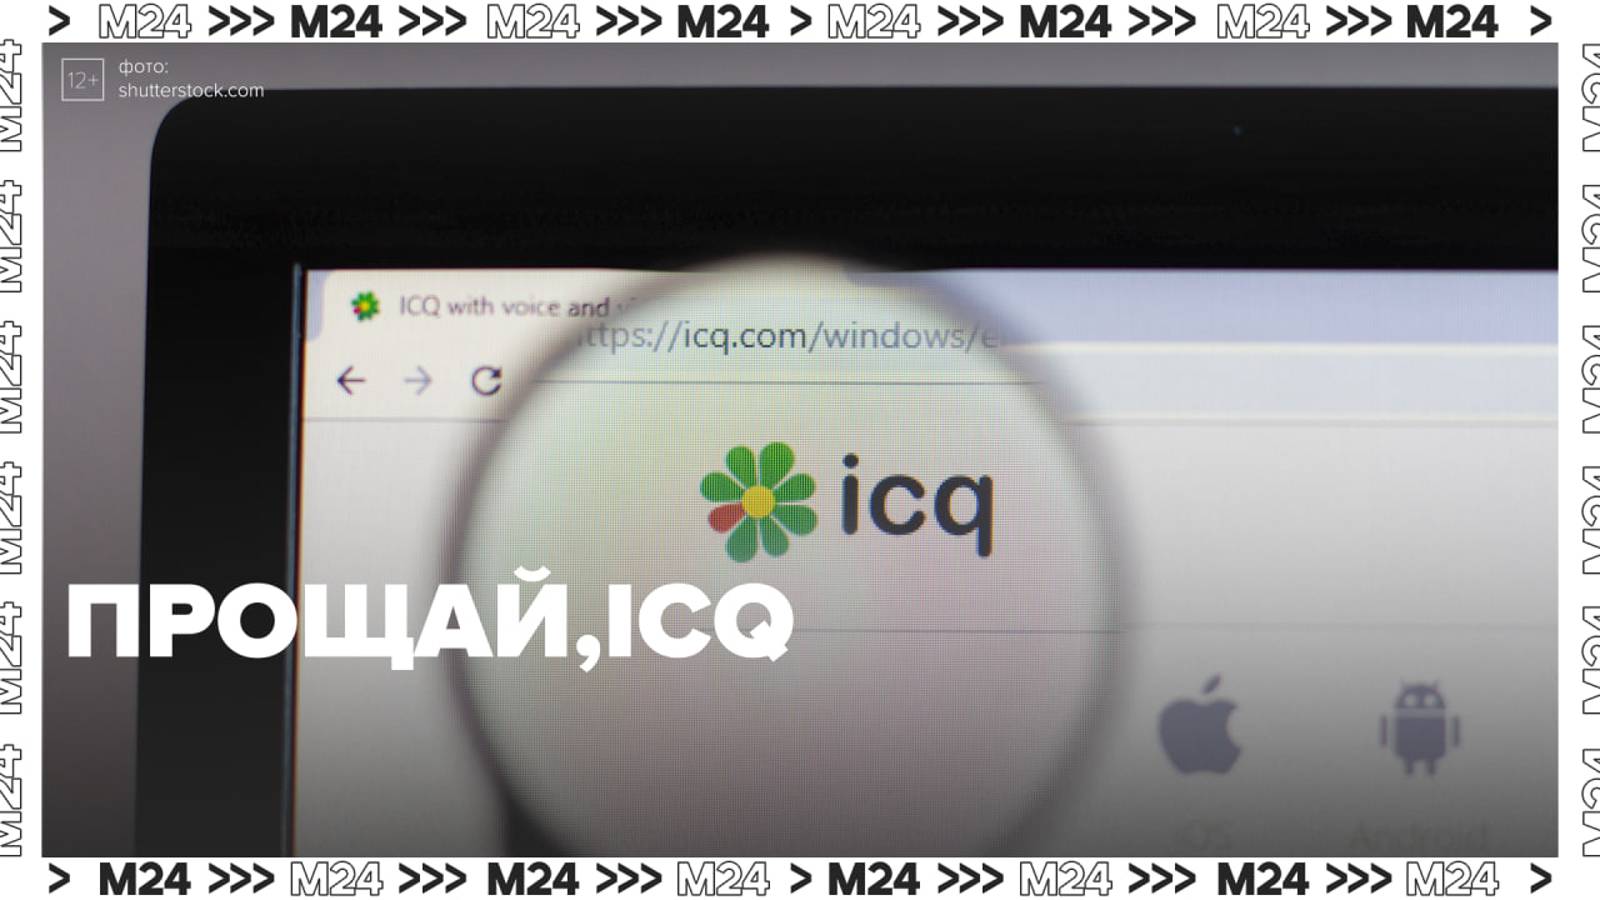 Мессенджер ICQ официально завершил работу — Москва 24|Контент